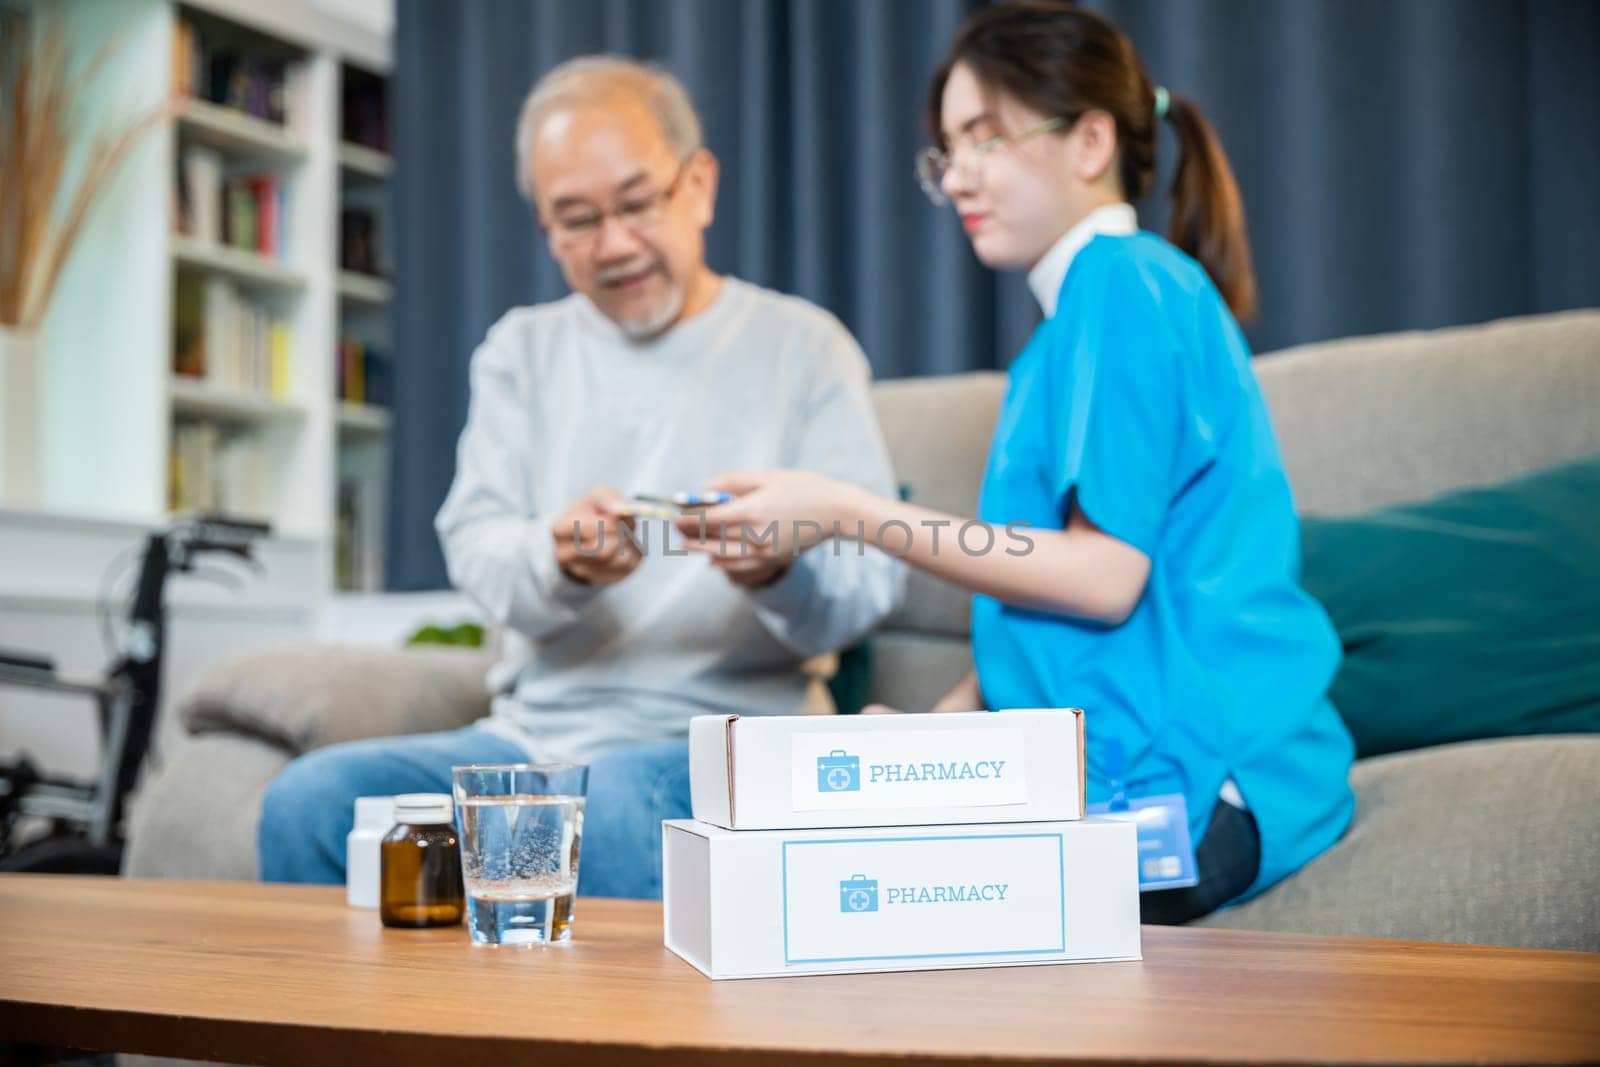 Woman nurse caregiver show prescription drug to senior man at nursing home by Sorapop